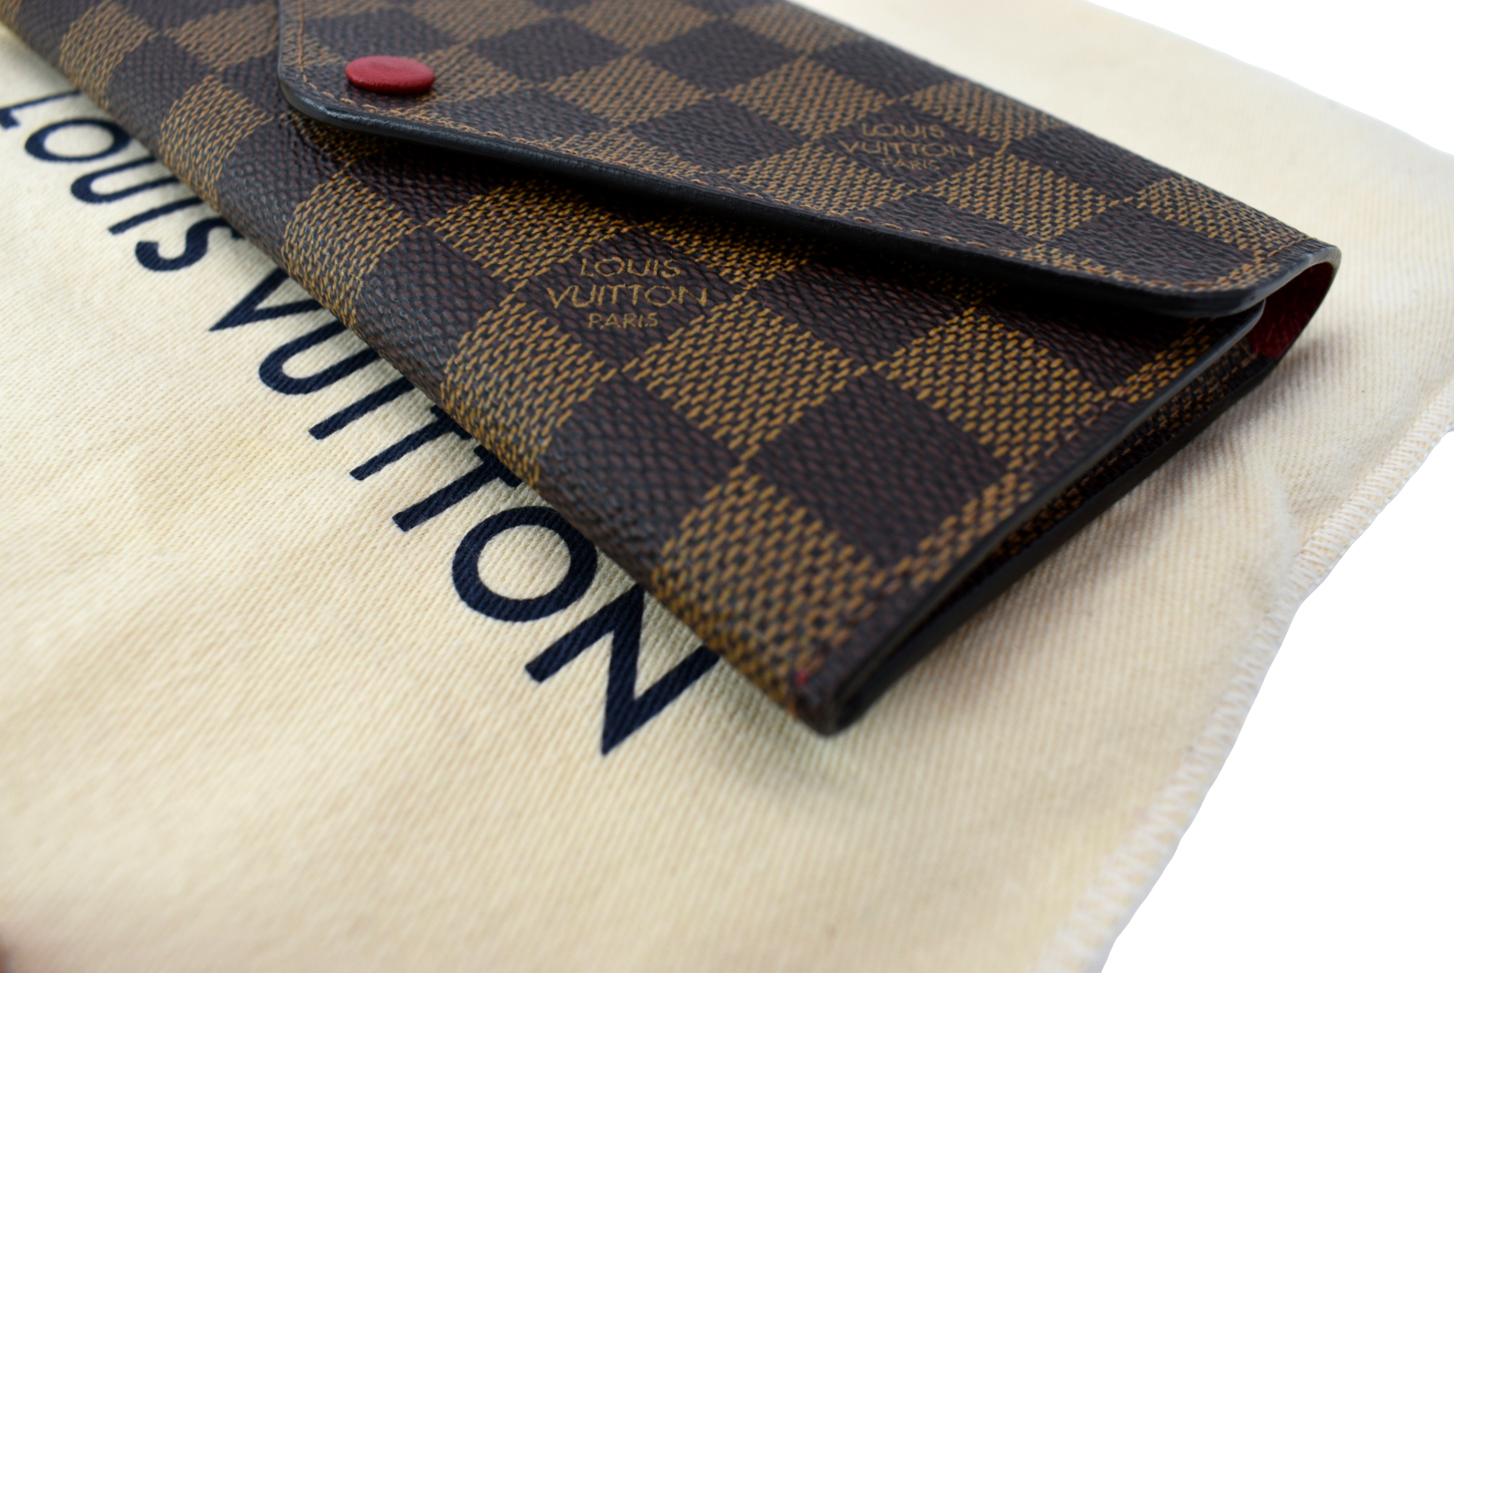 Joséphine wallet Louis Vuitton Brown in Other - 31330542